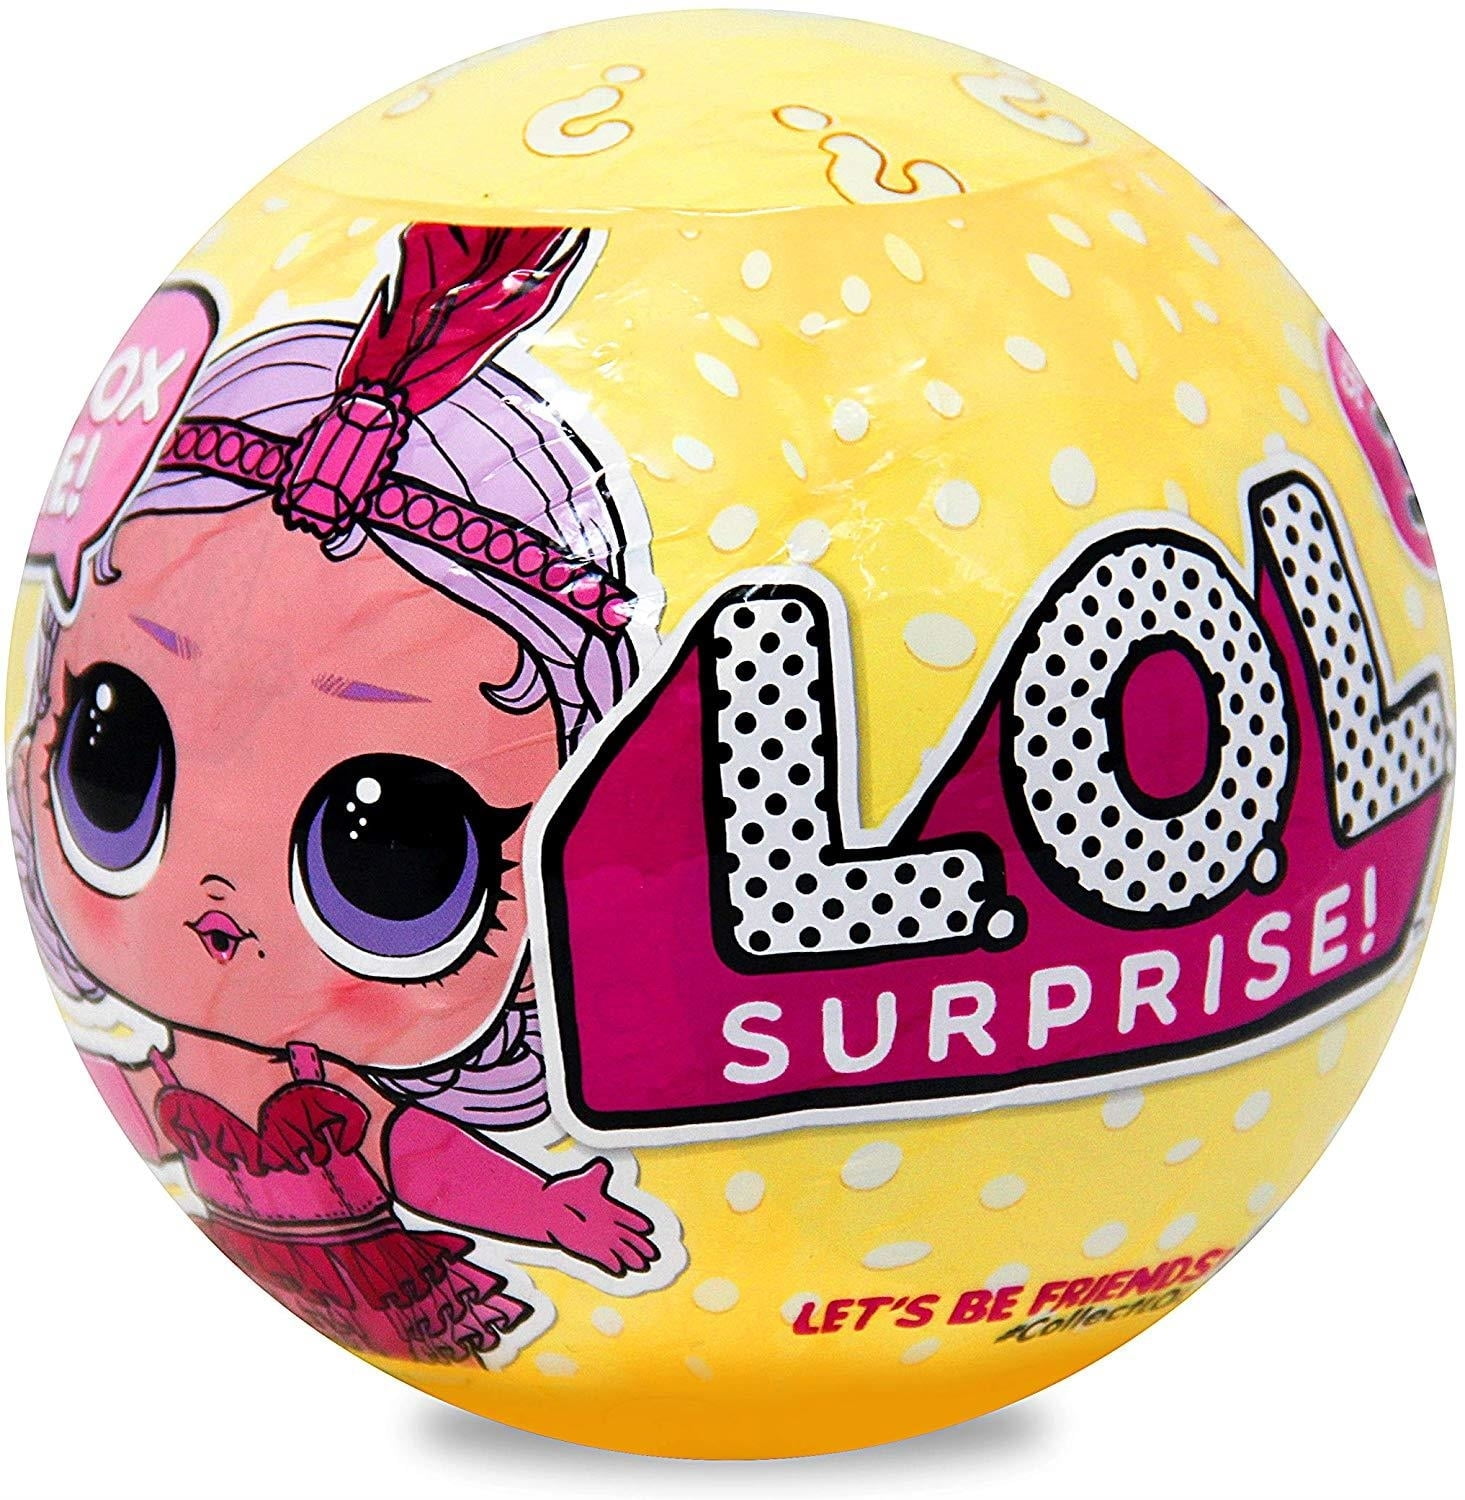 L.O.L. Surprise! Series 3 Wave 1 Big Sister LOL Doll Exclusive Limited MGA - Walmart.com ...